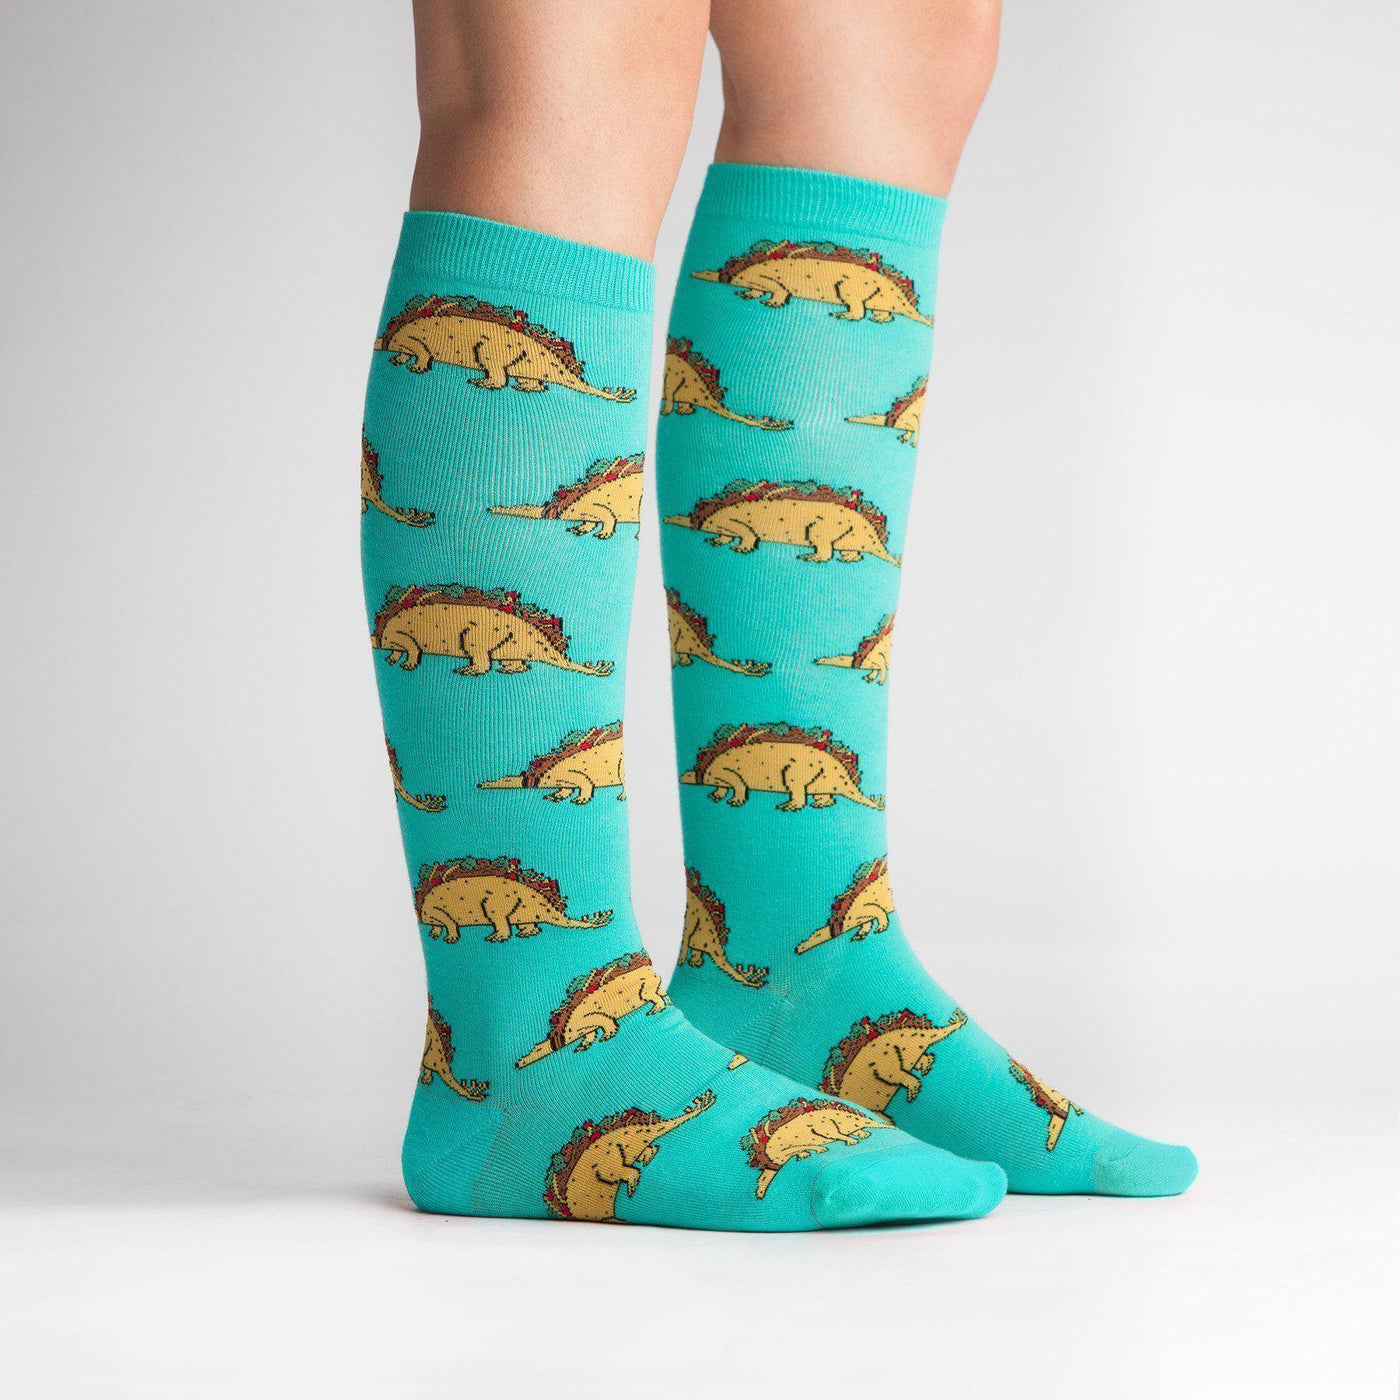 Sock It To Me - Tacosaurus Knee High Socks | Women's - Knock Your Socks Off